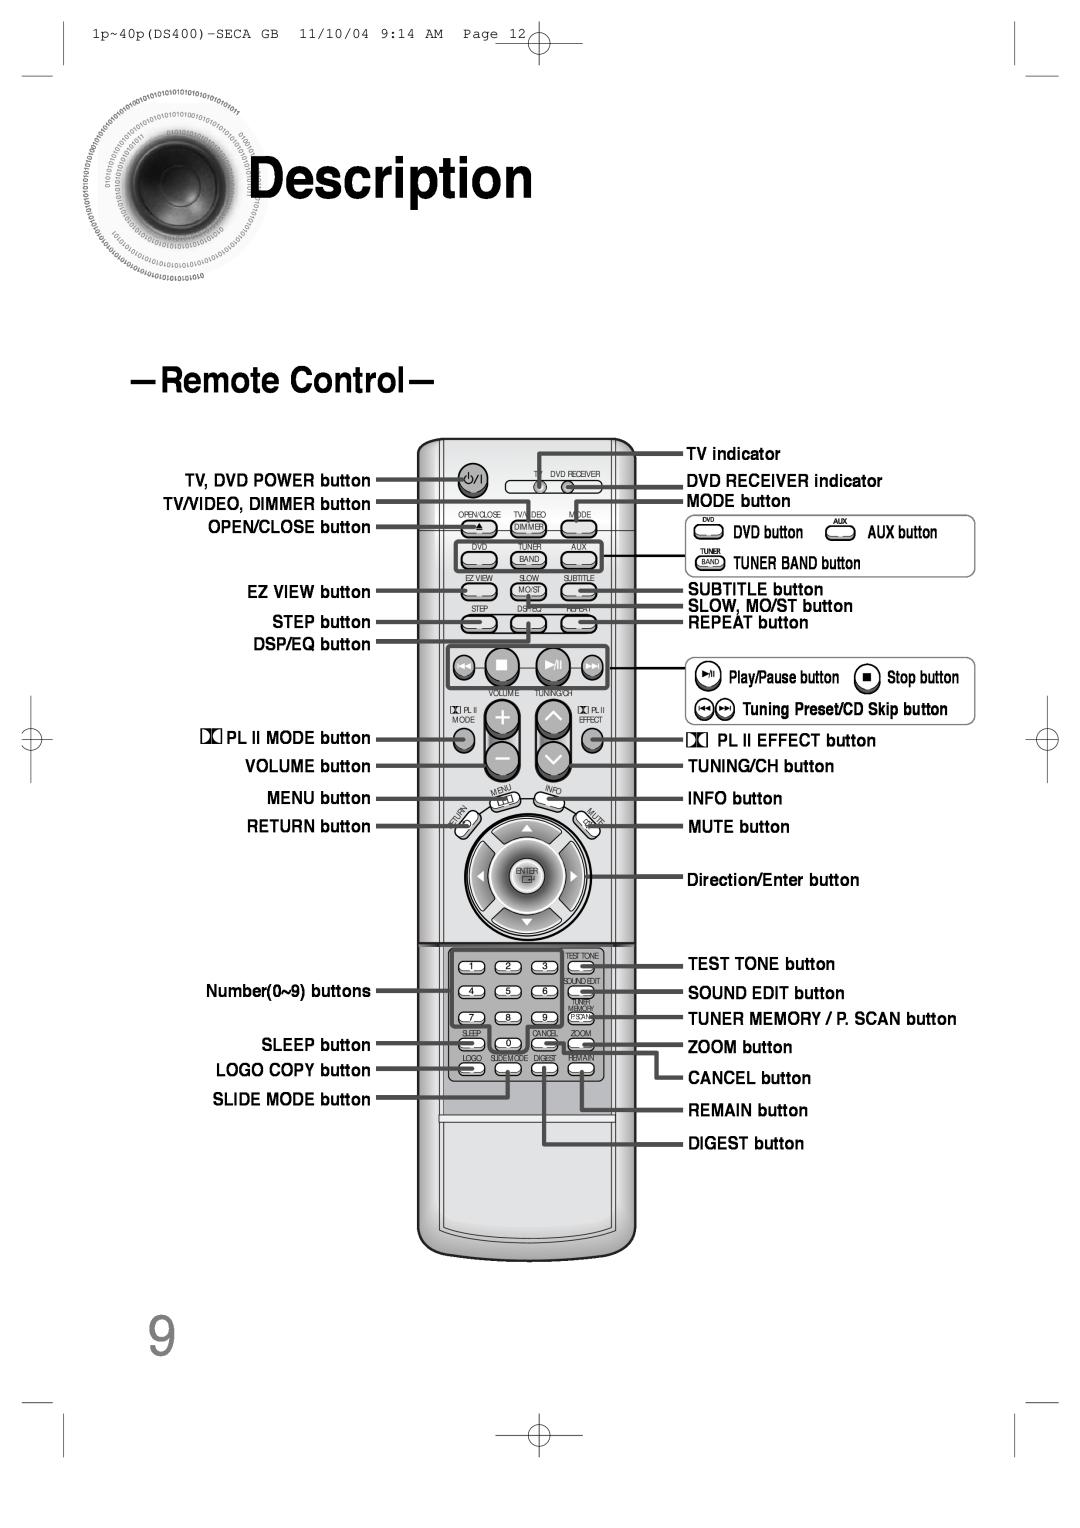 Samsung HT-DS400 instruction manual RemoteControl, Description, SLEEP button 